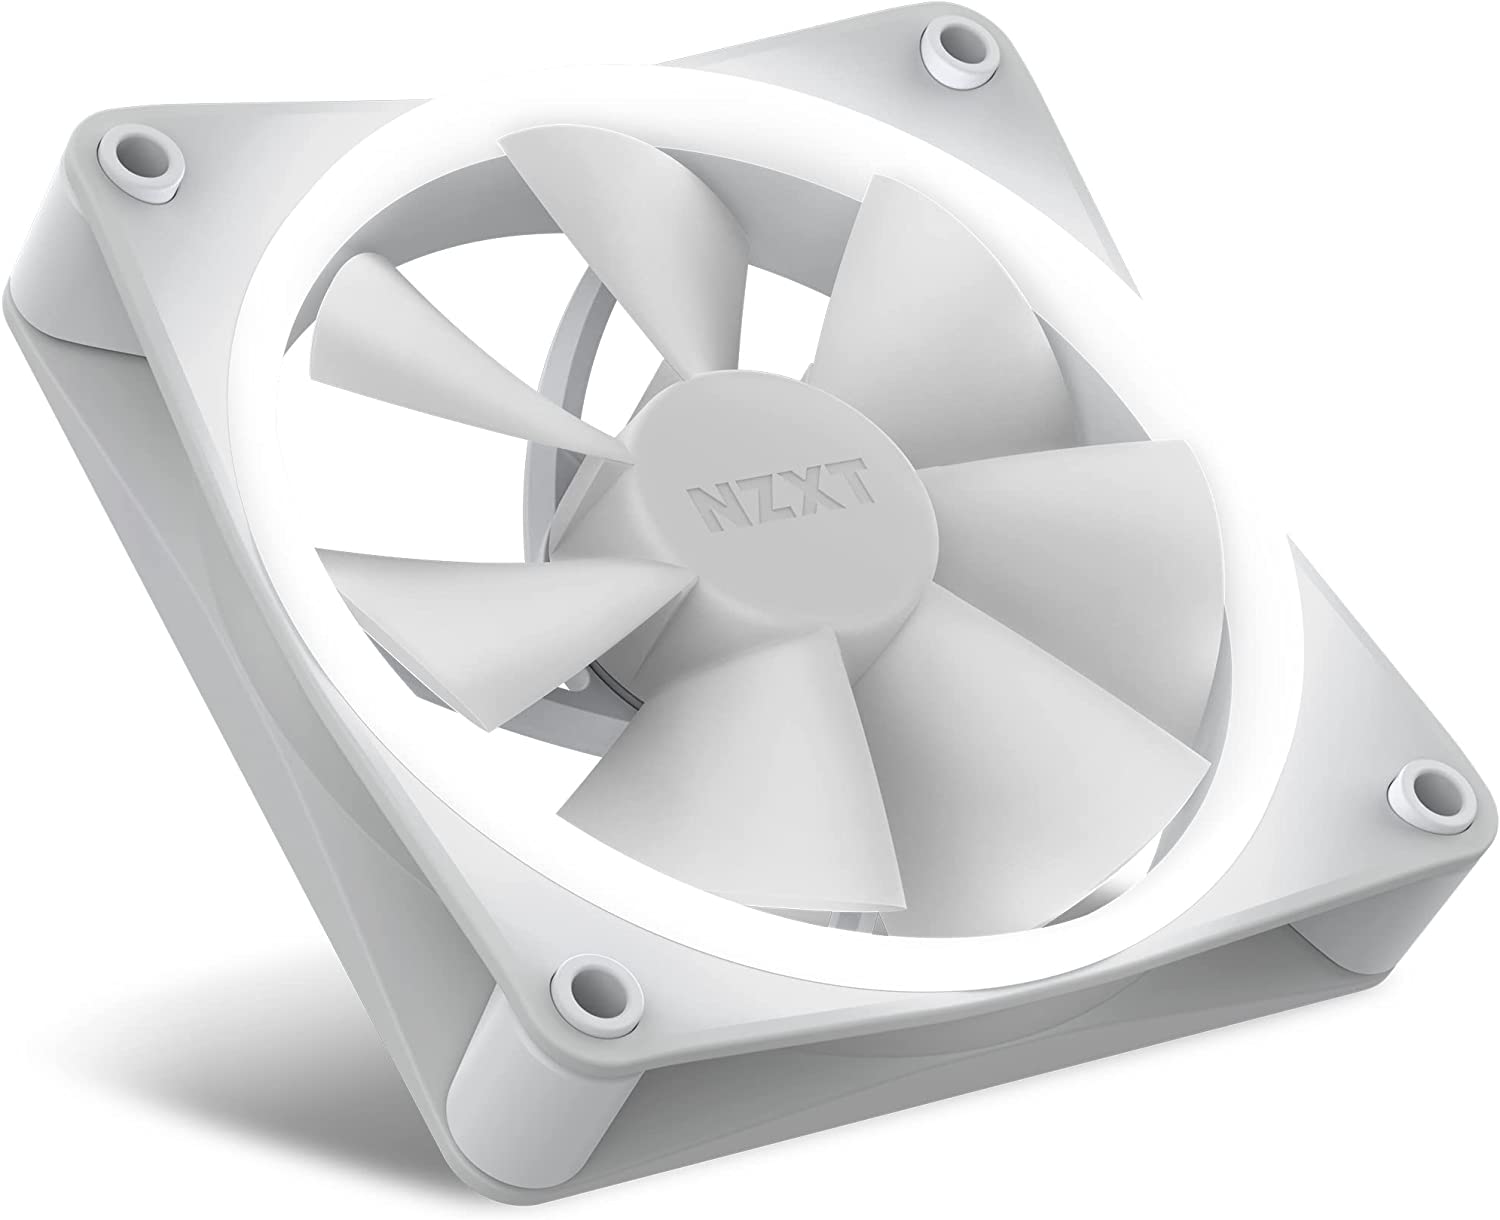 NZXT F120 RGB PWM Single Fan ,White | RF-R12SF-W1